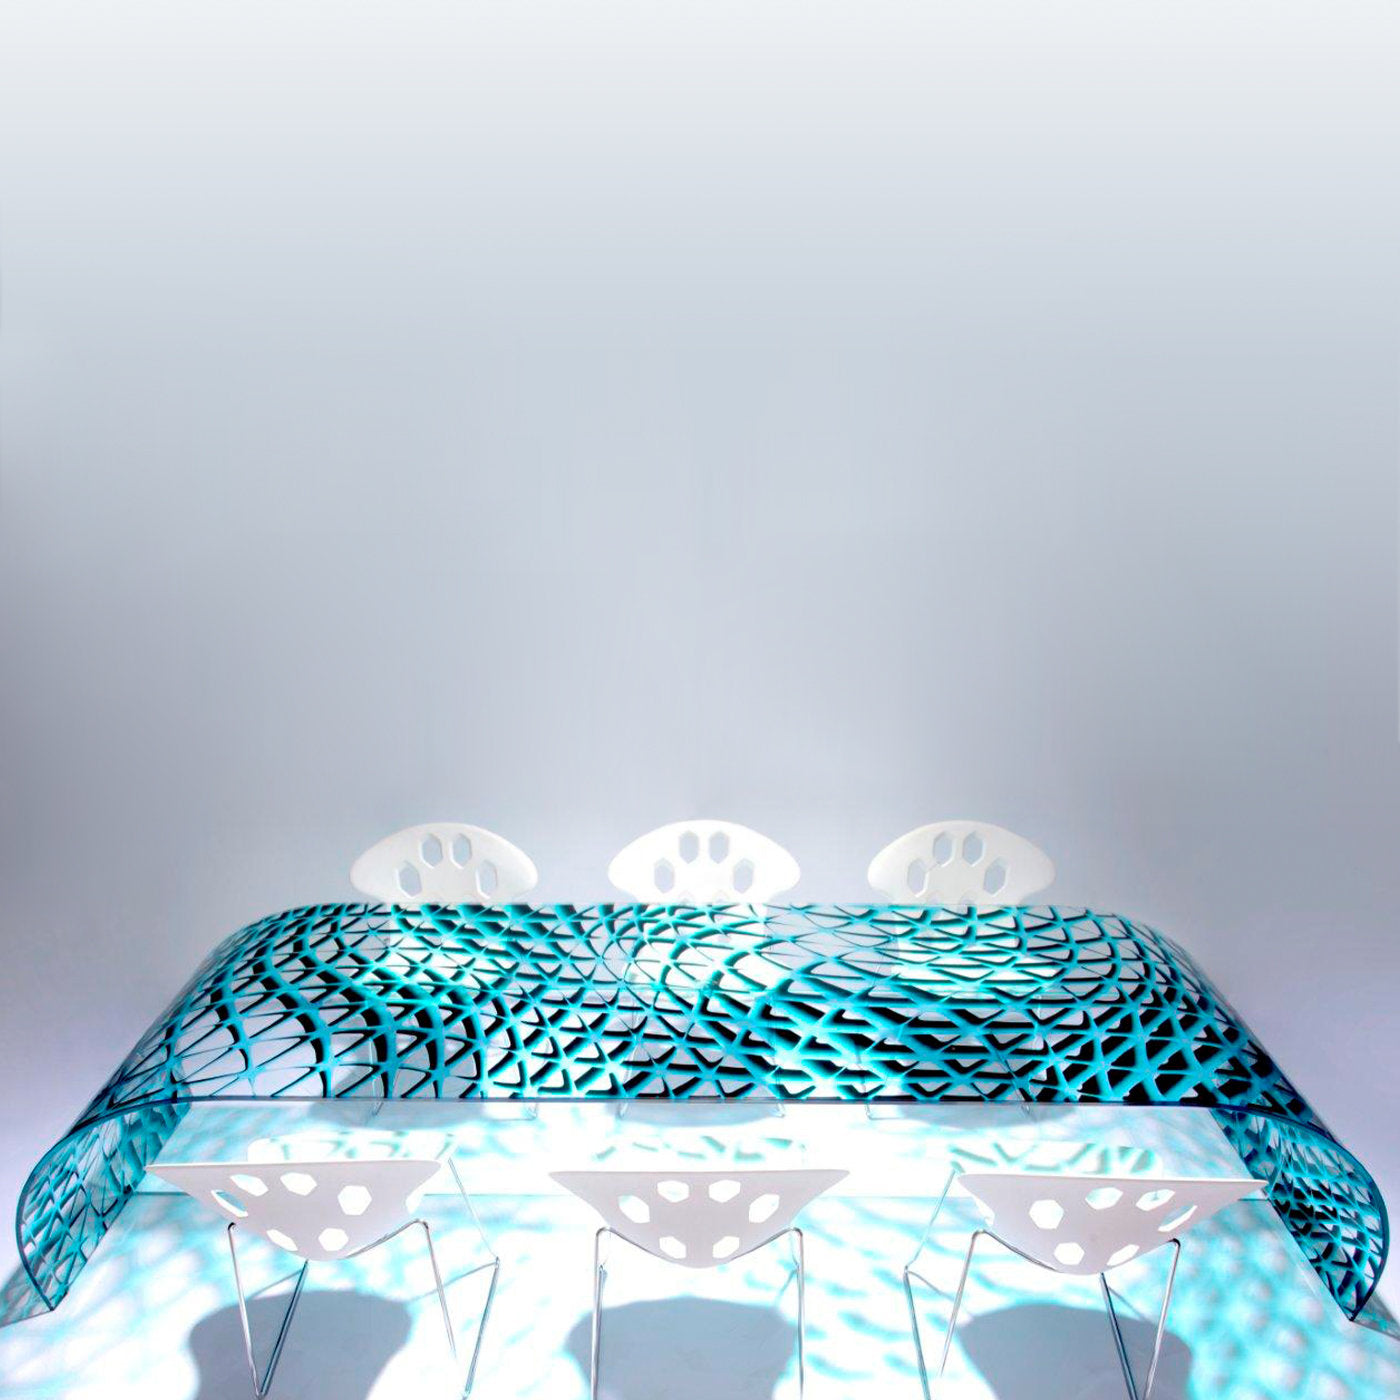 Nastro 3D Glass Table by Daniele Merini and Mac Stopà - Alternative view 1